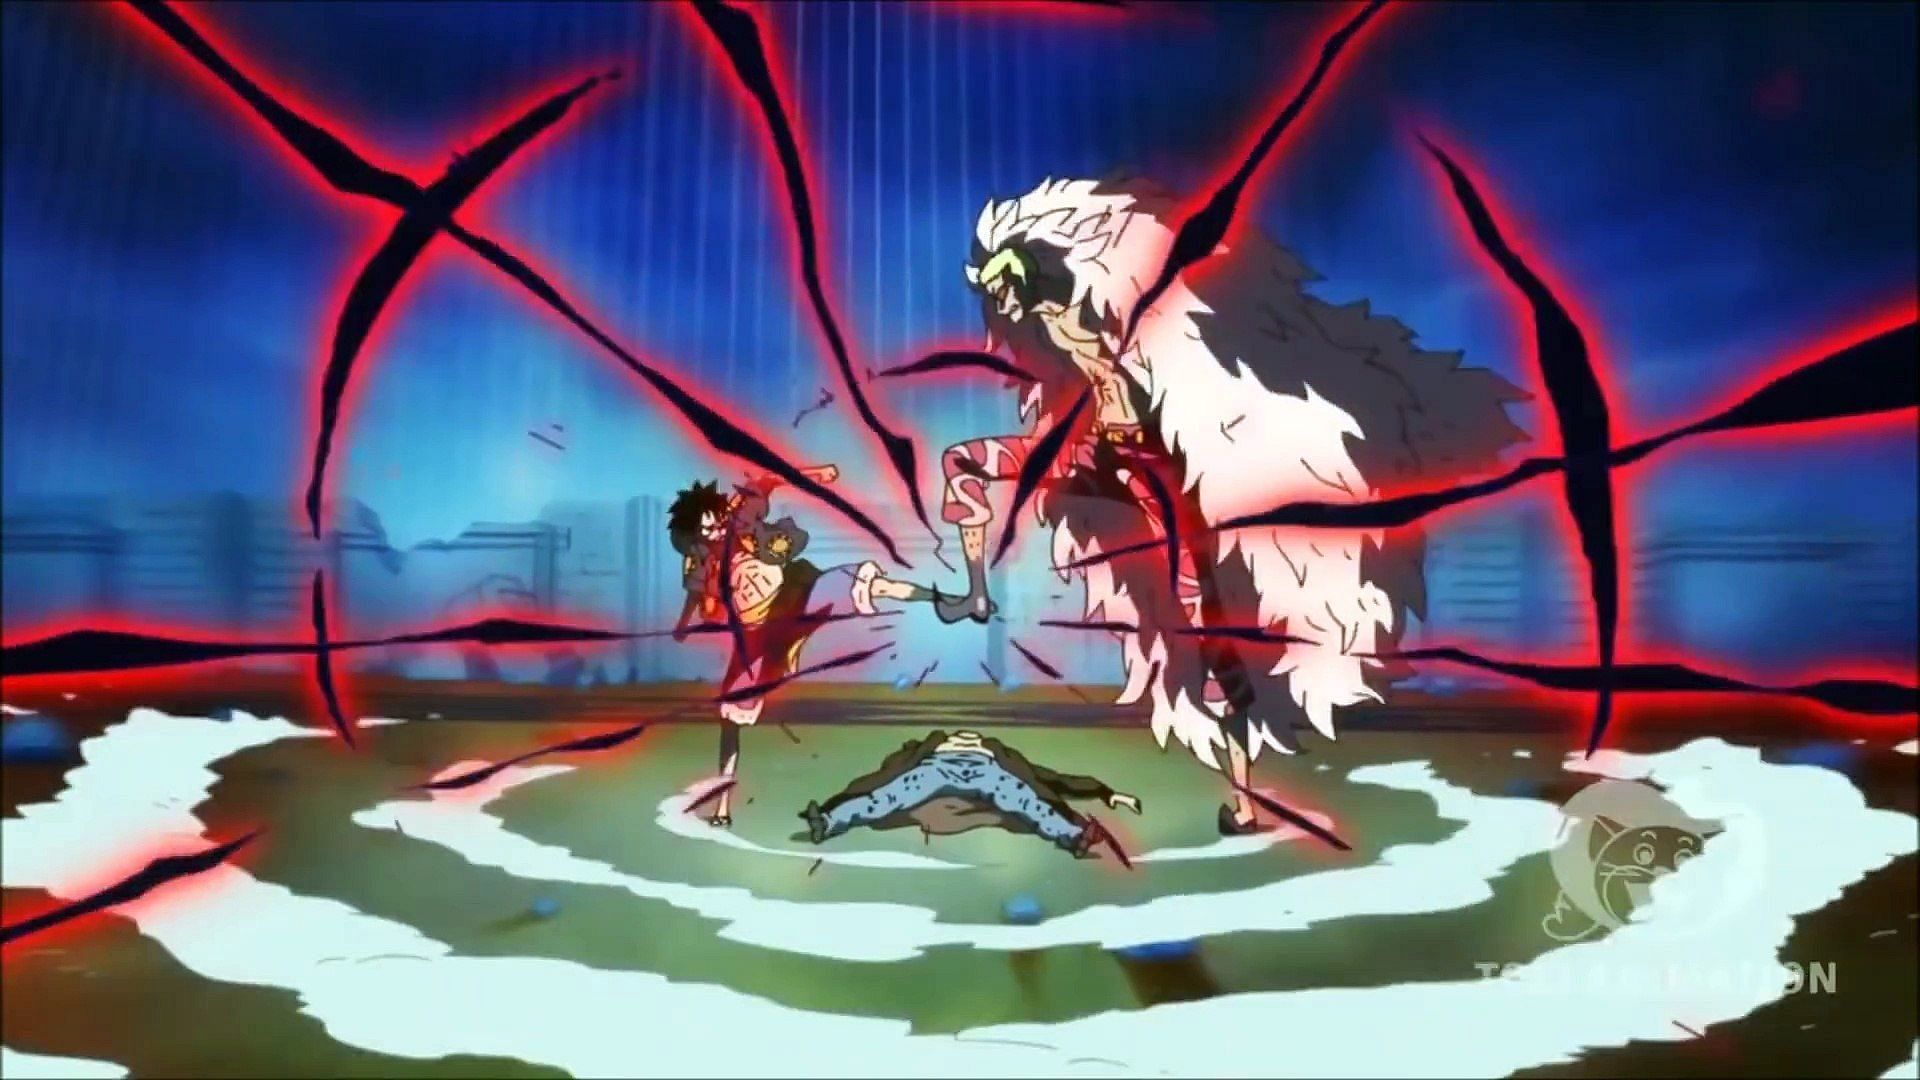 A Conqueror&#039;s Haki clash as seen in the &#039;One Piece&#039; anime (Image via Toei Animation)